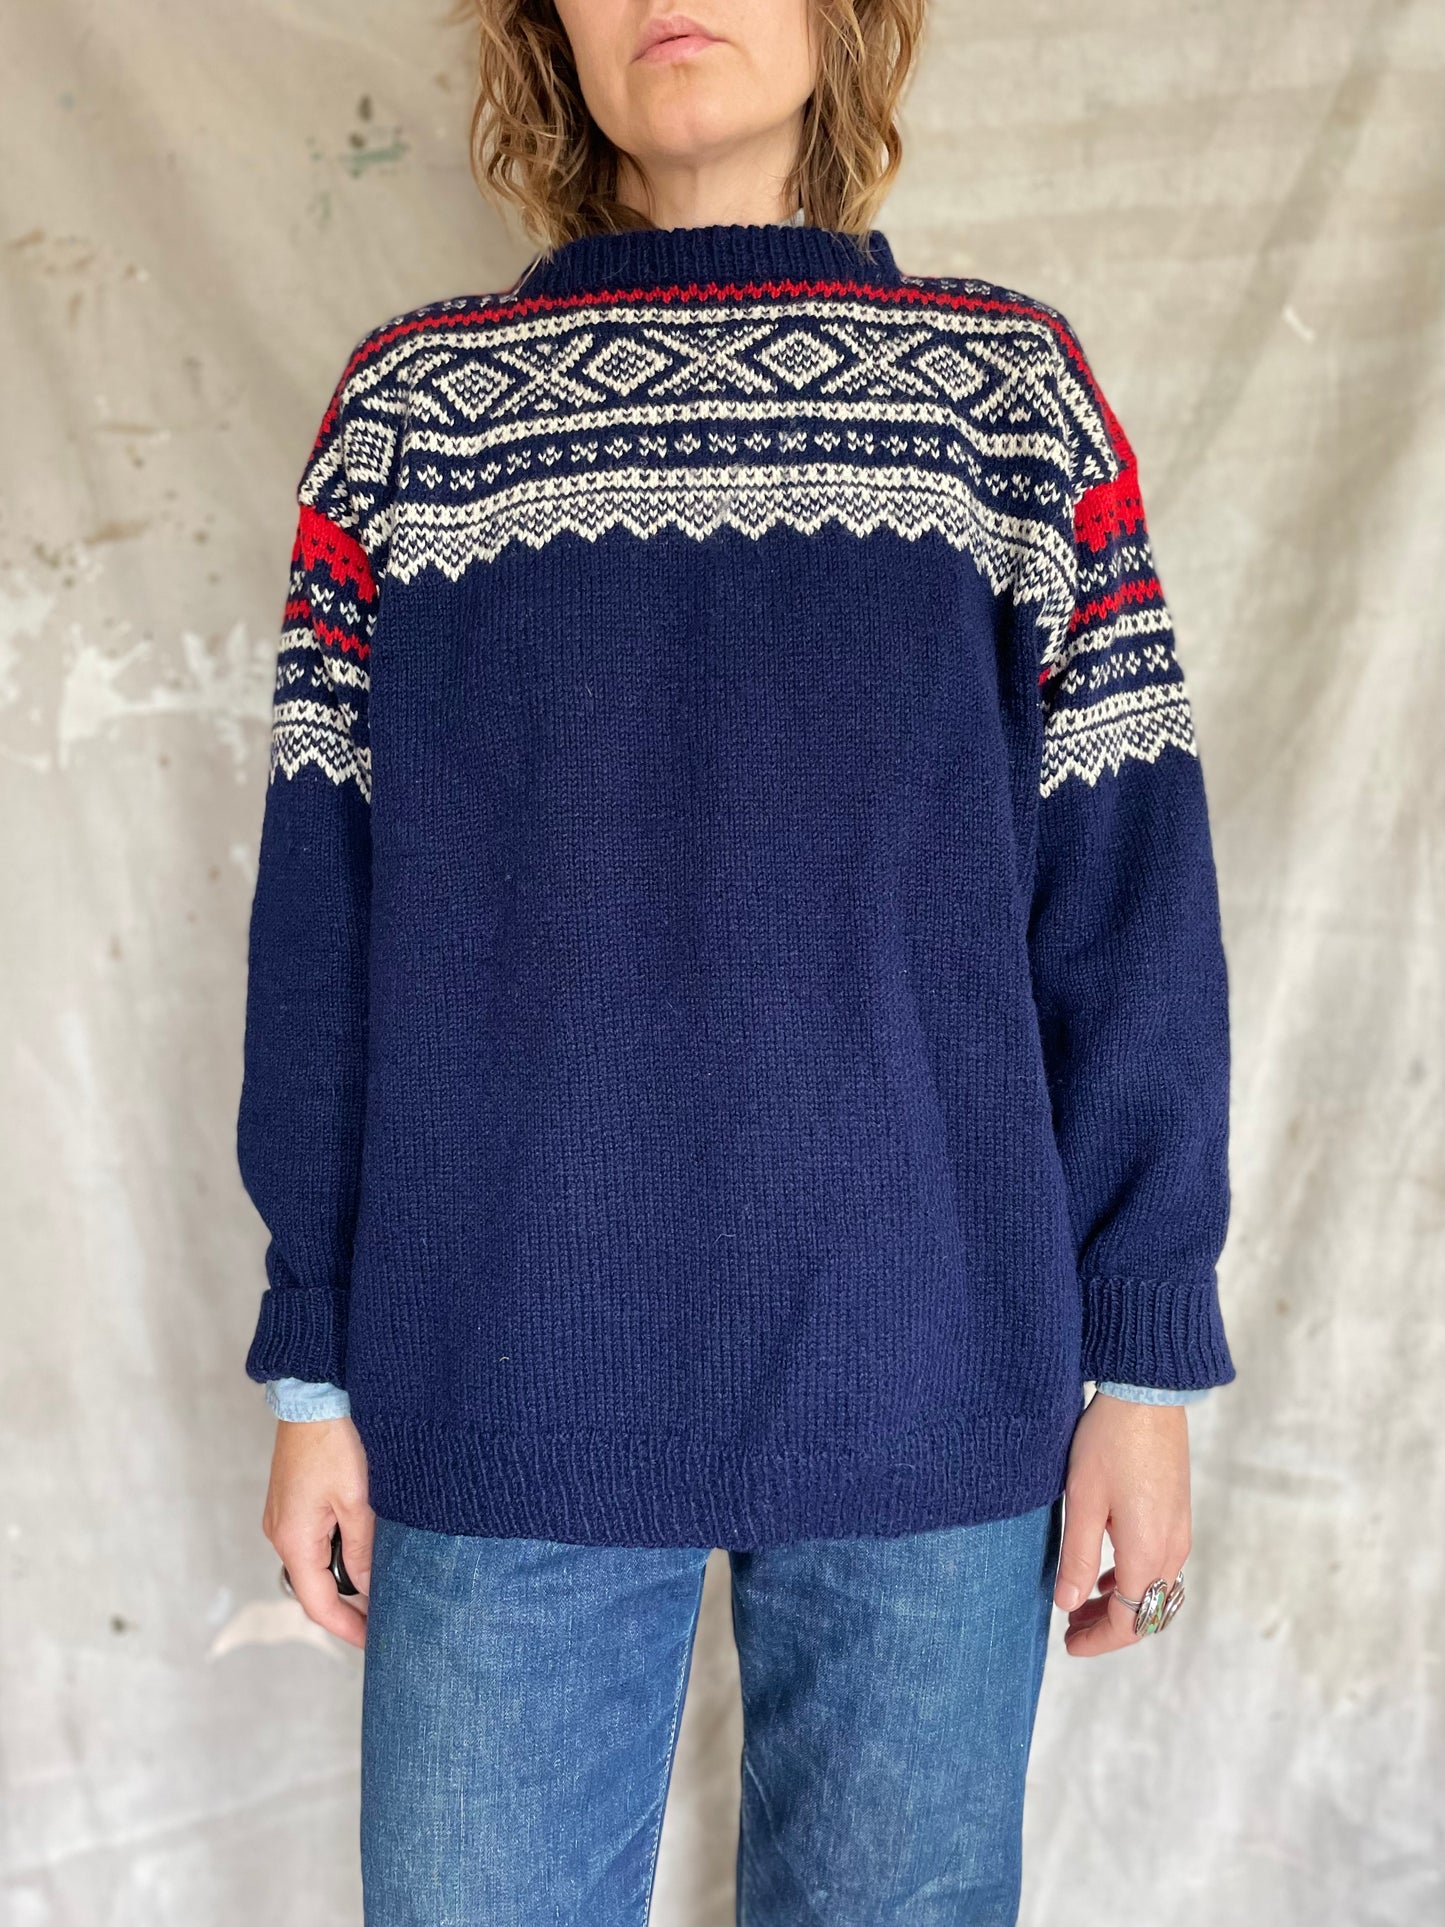 80s Norwegian Knit Sweater